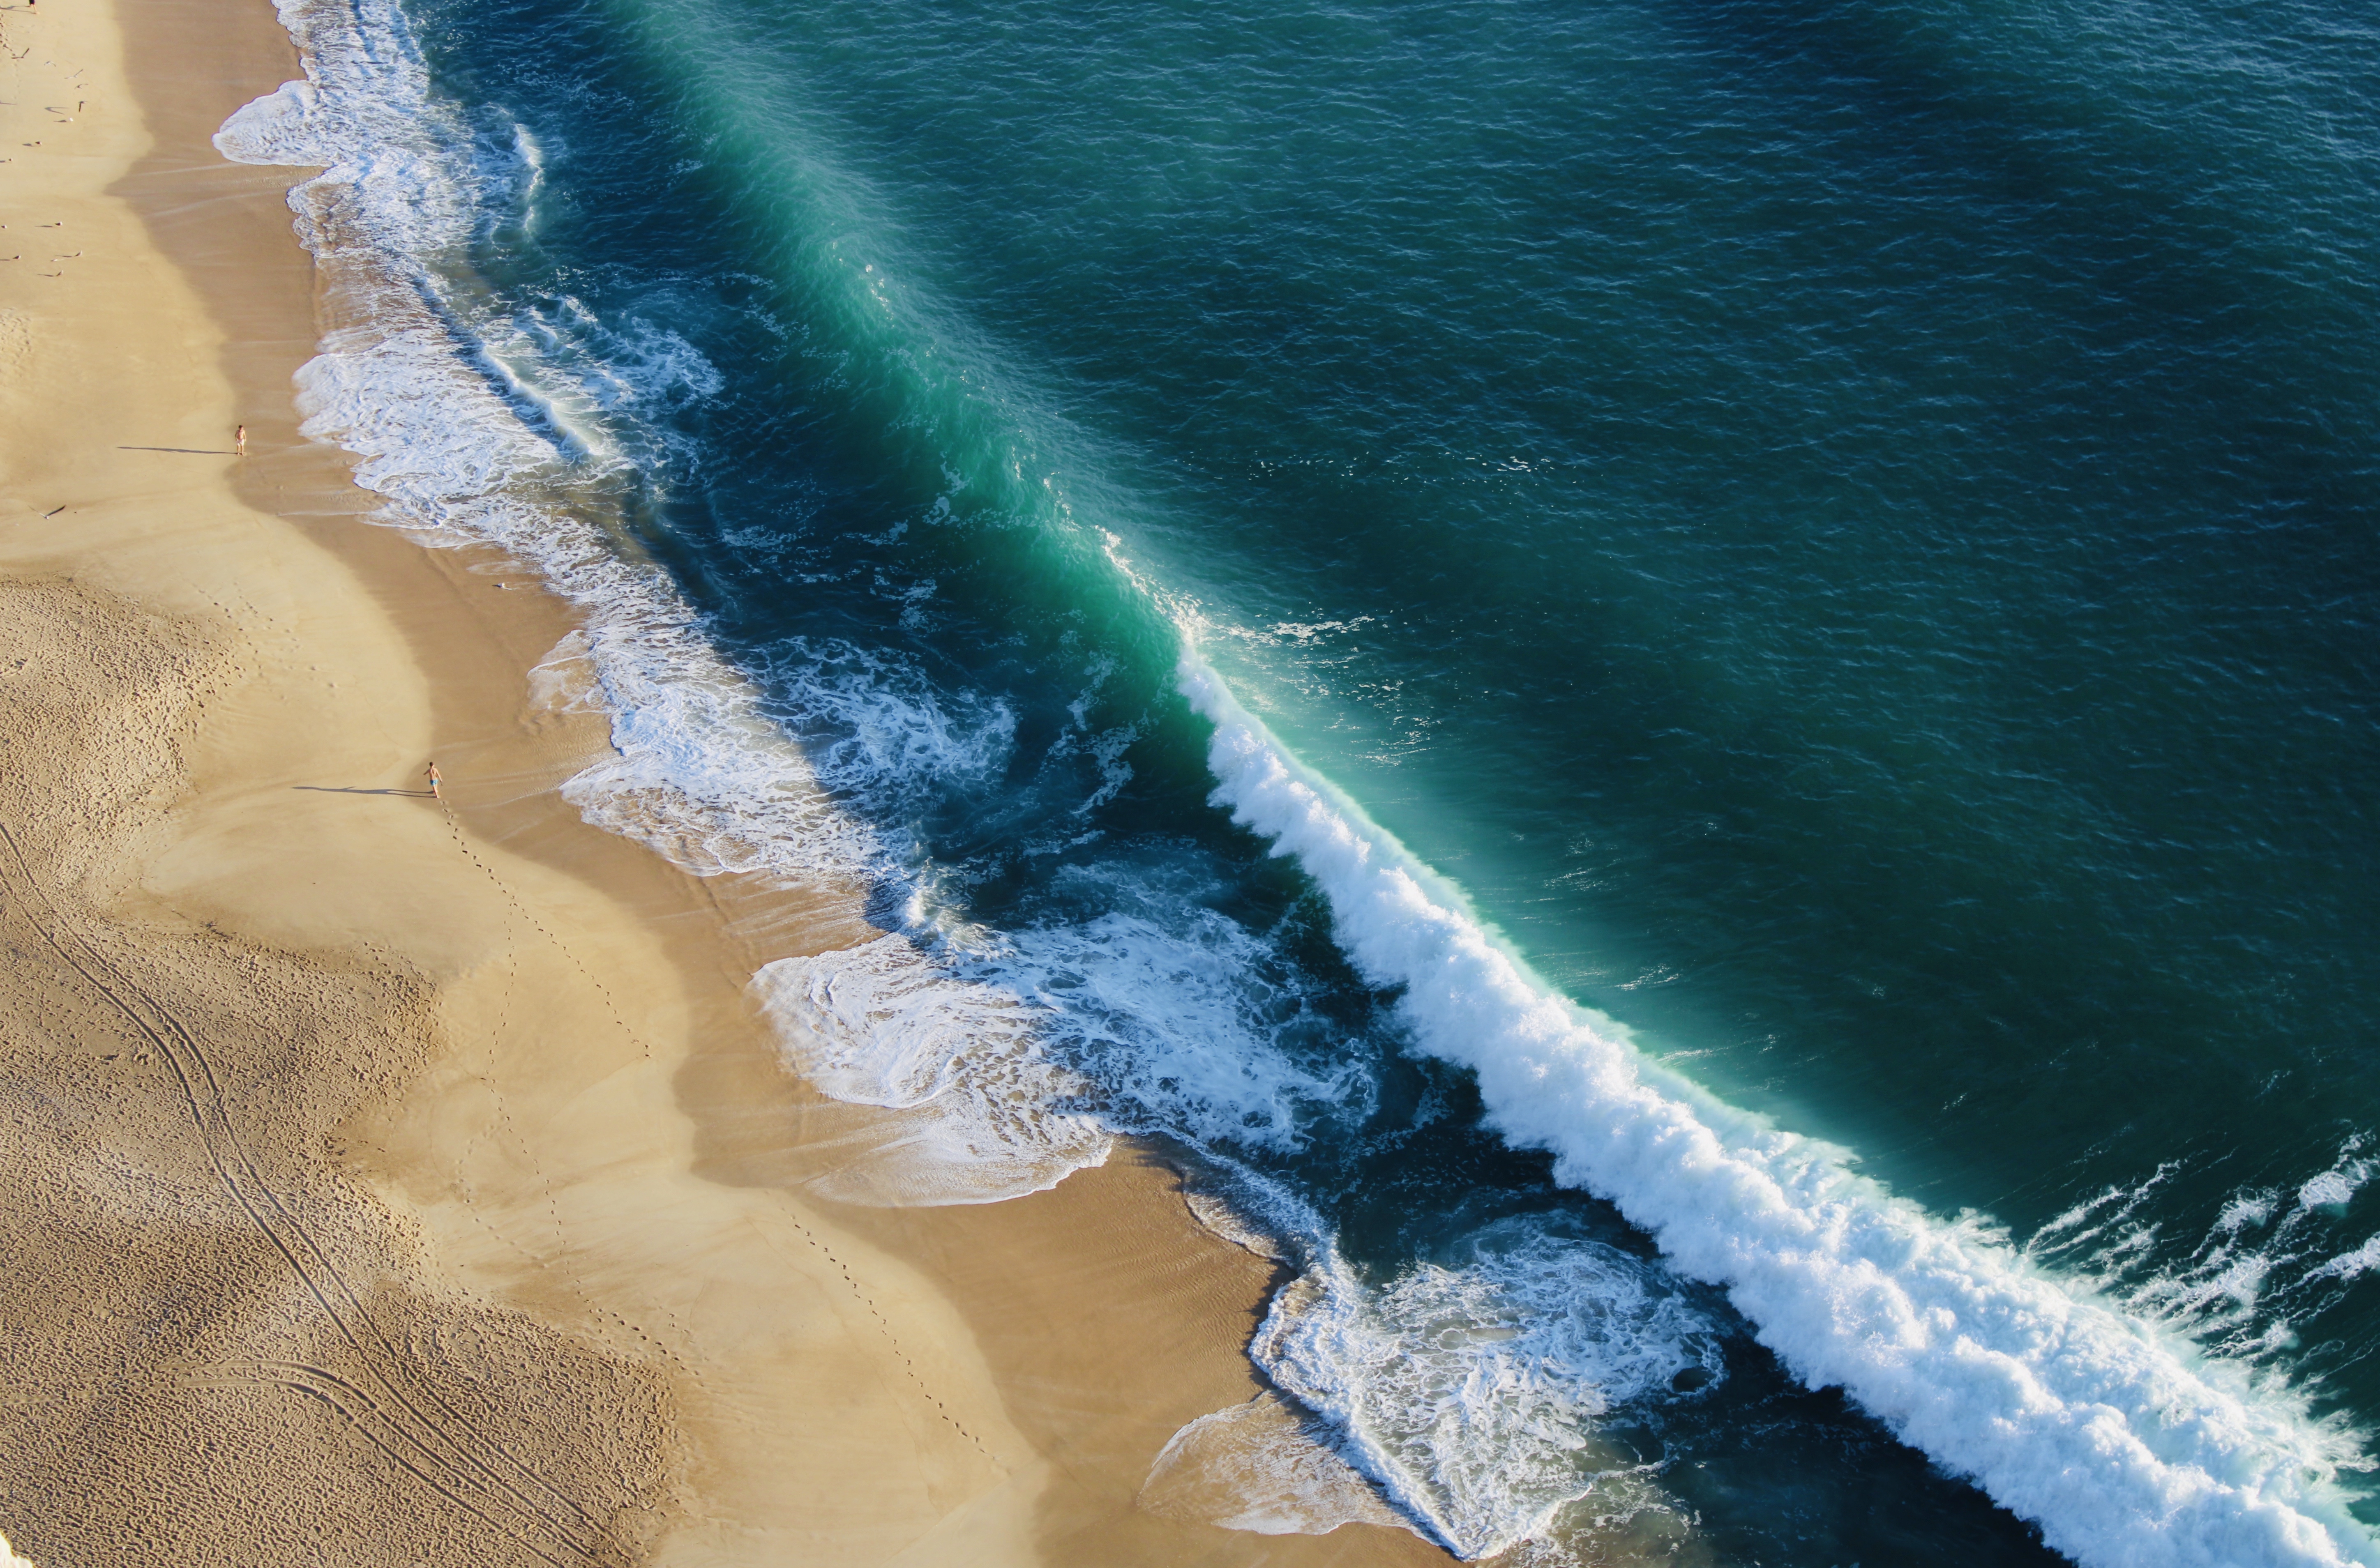 A giant wave ready to crash onto the coast of Portugal